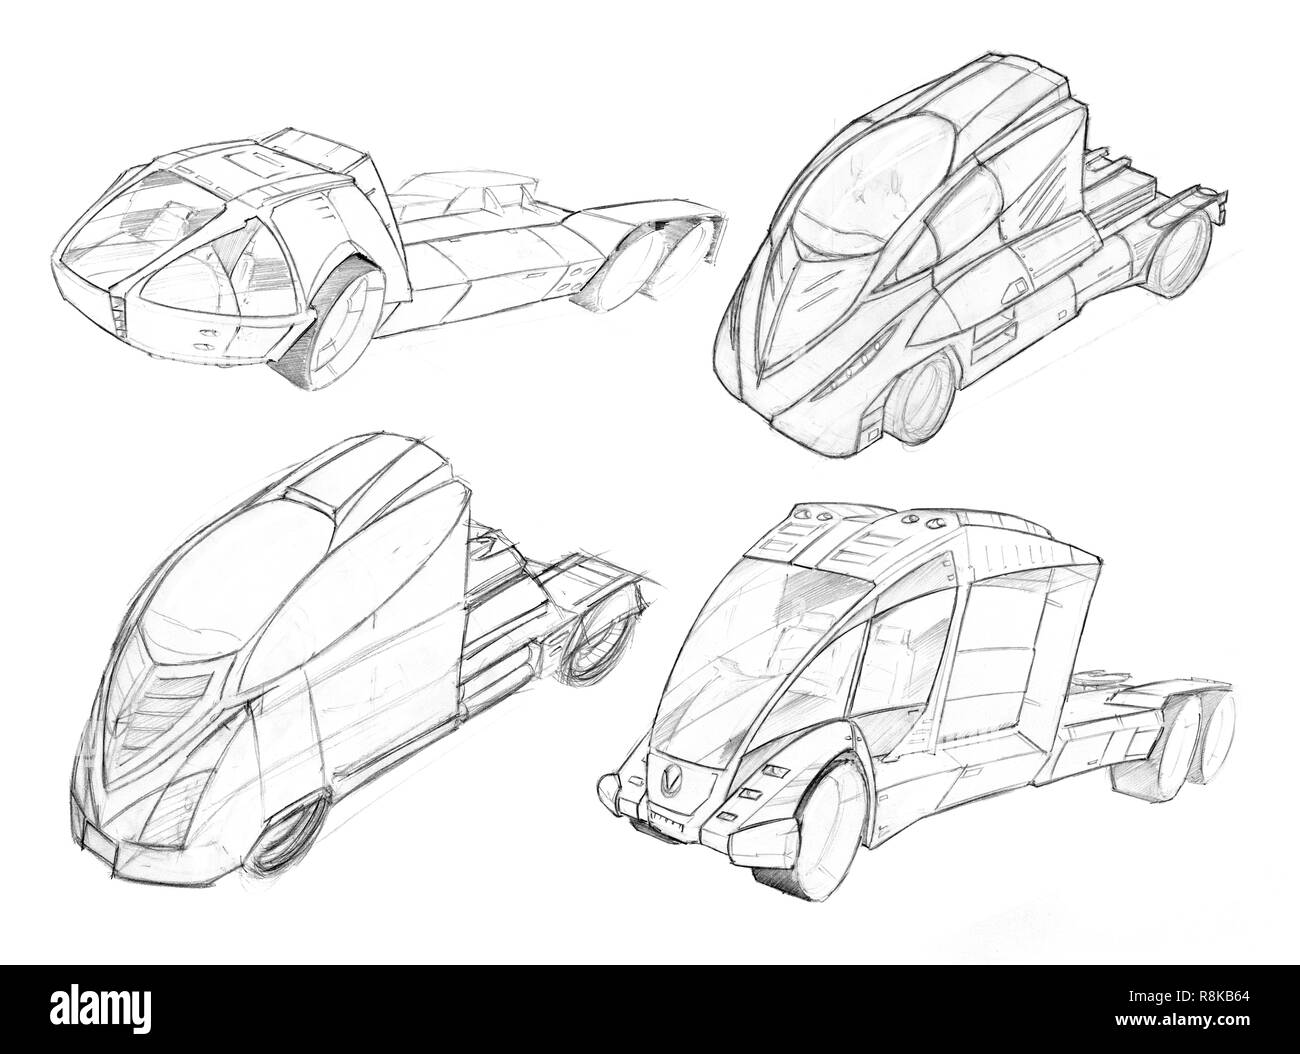 Pininfarina releases Sintesi Concept sketch ahead of Geneva